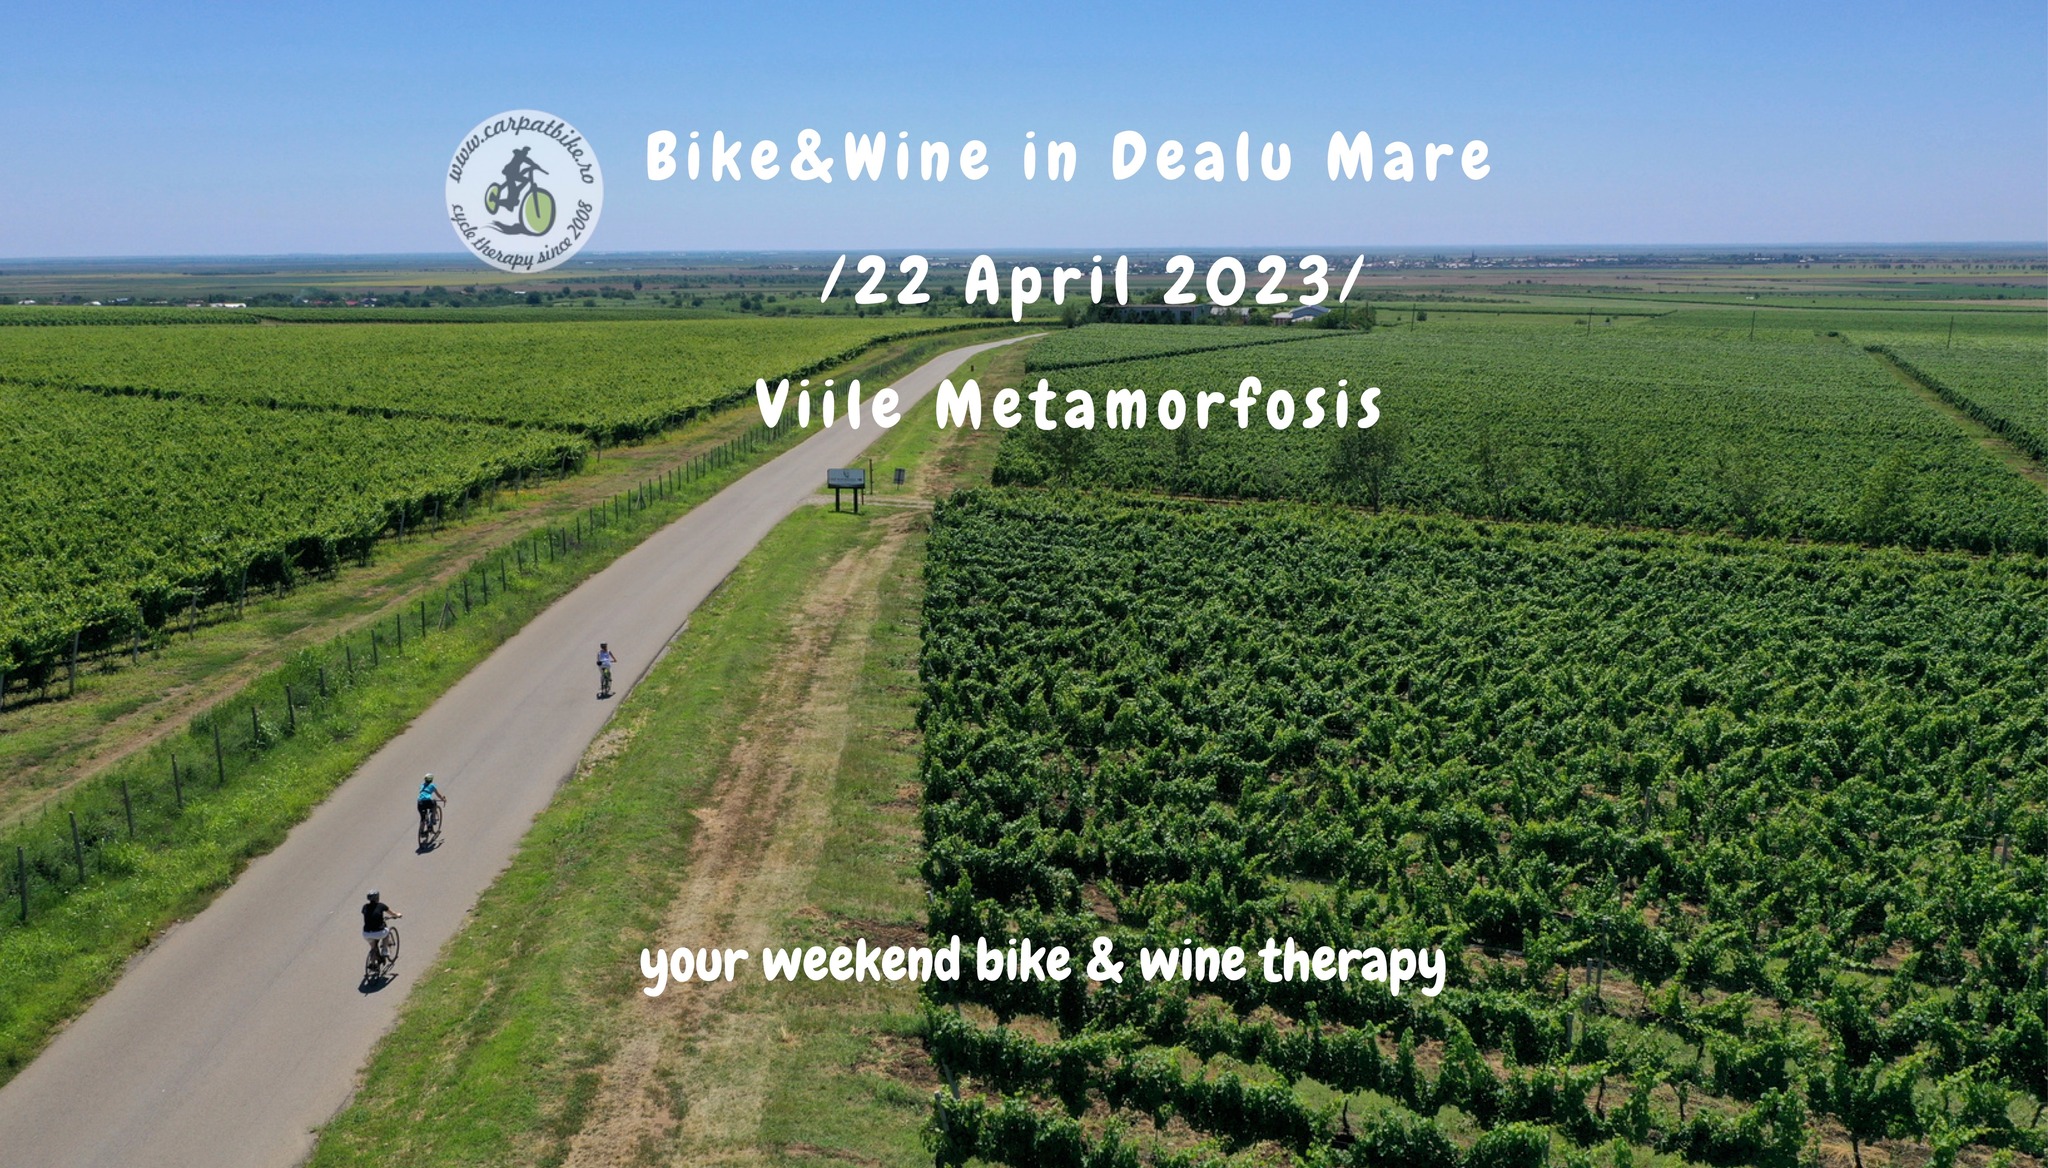 Bike&Wine - Crama Viile Metamorfosis!(Dealu Mare)